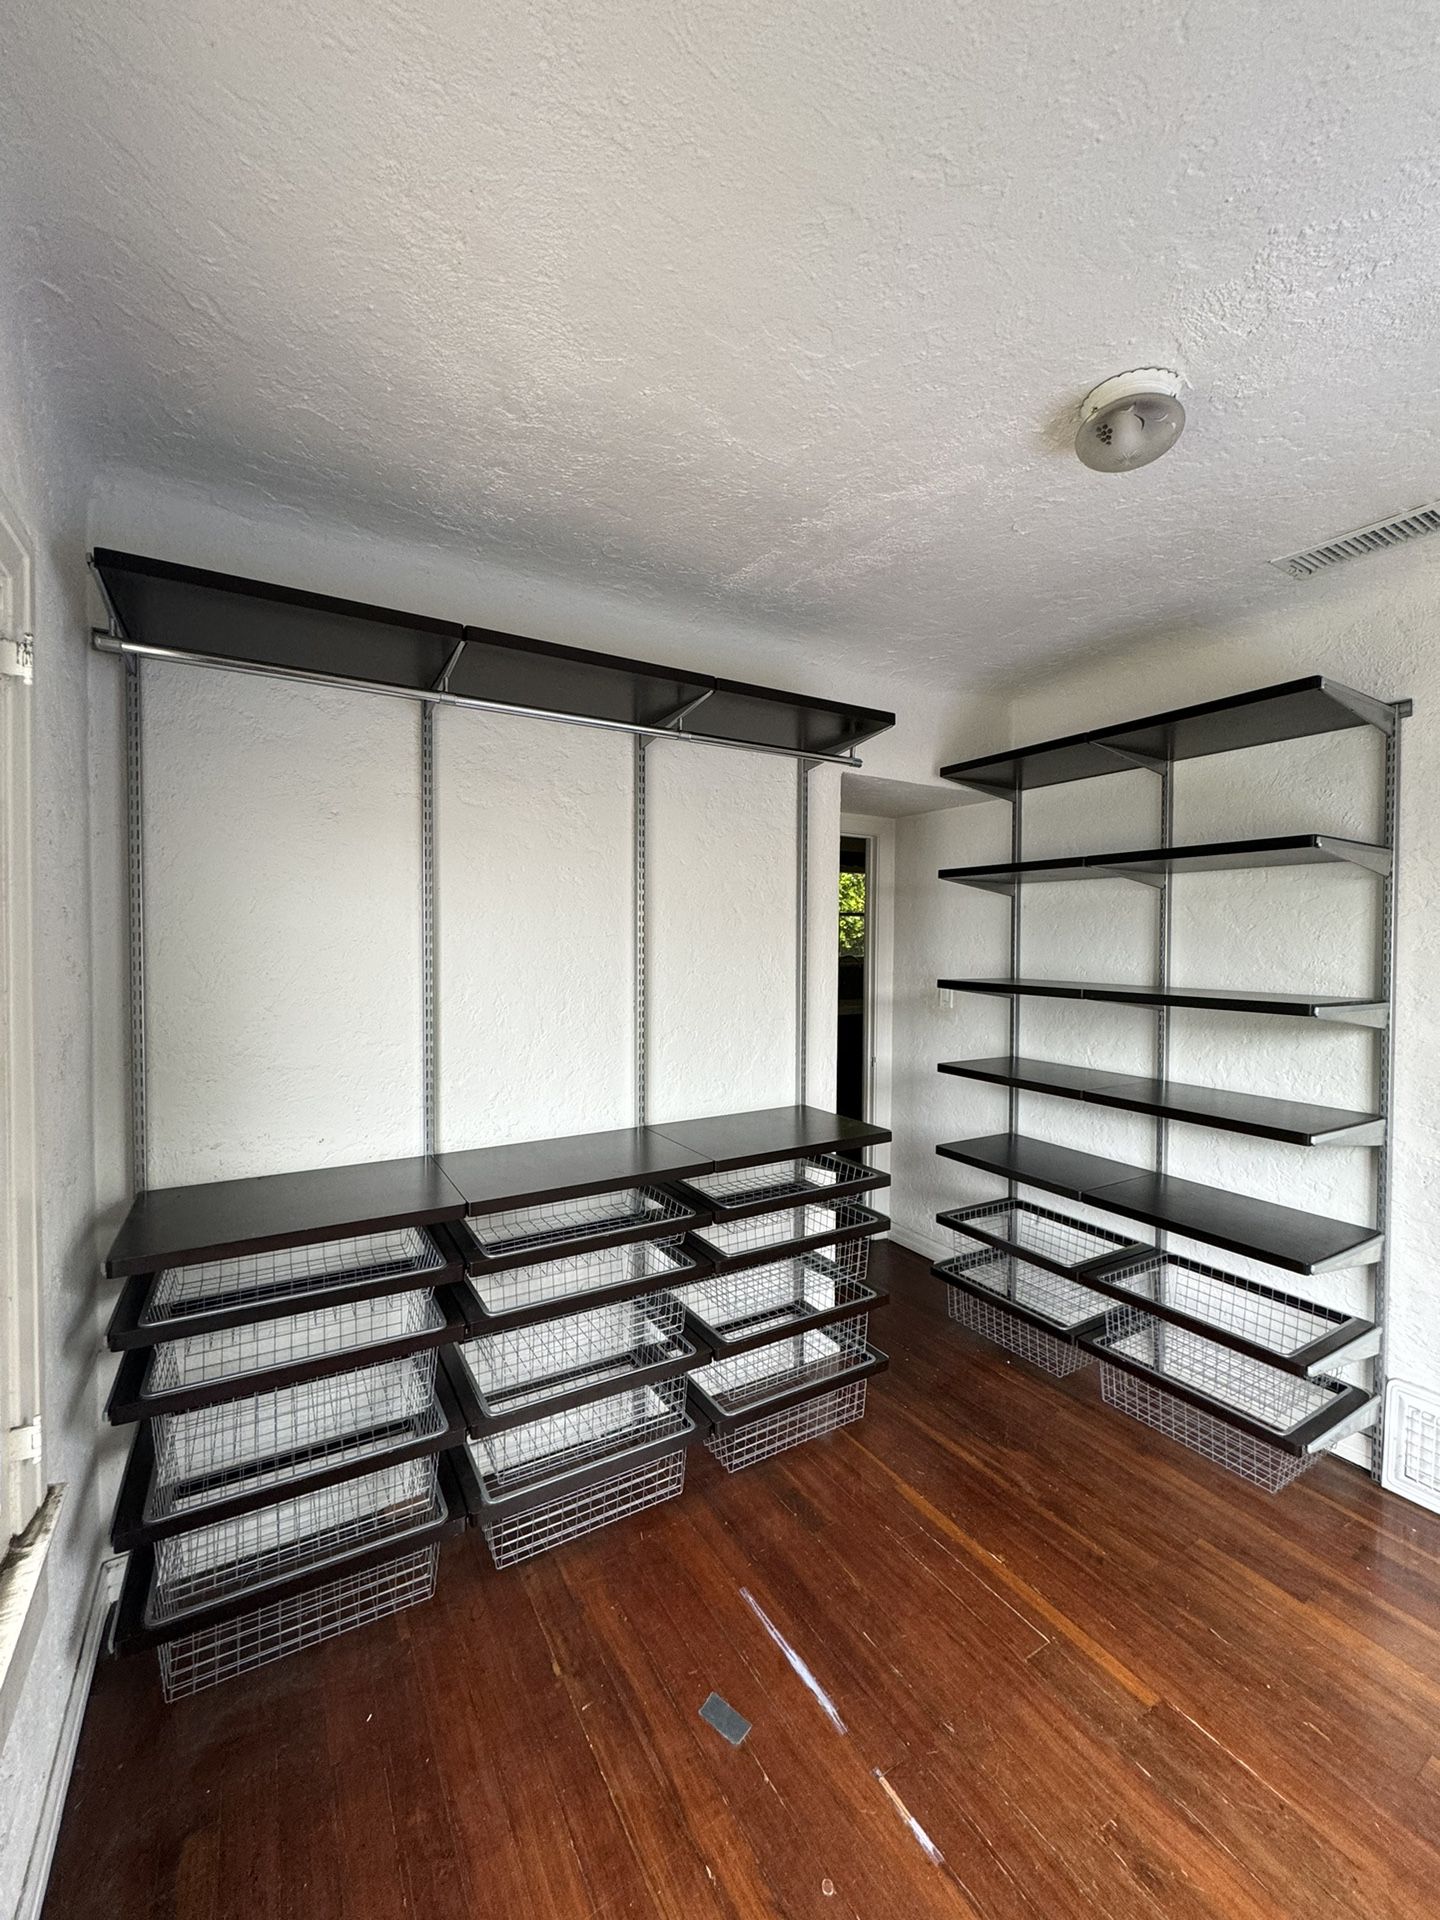 Elfa Shelves, Drawers & Hanging Closet System - Shelves & Storage